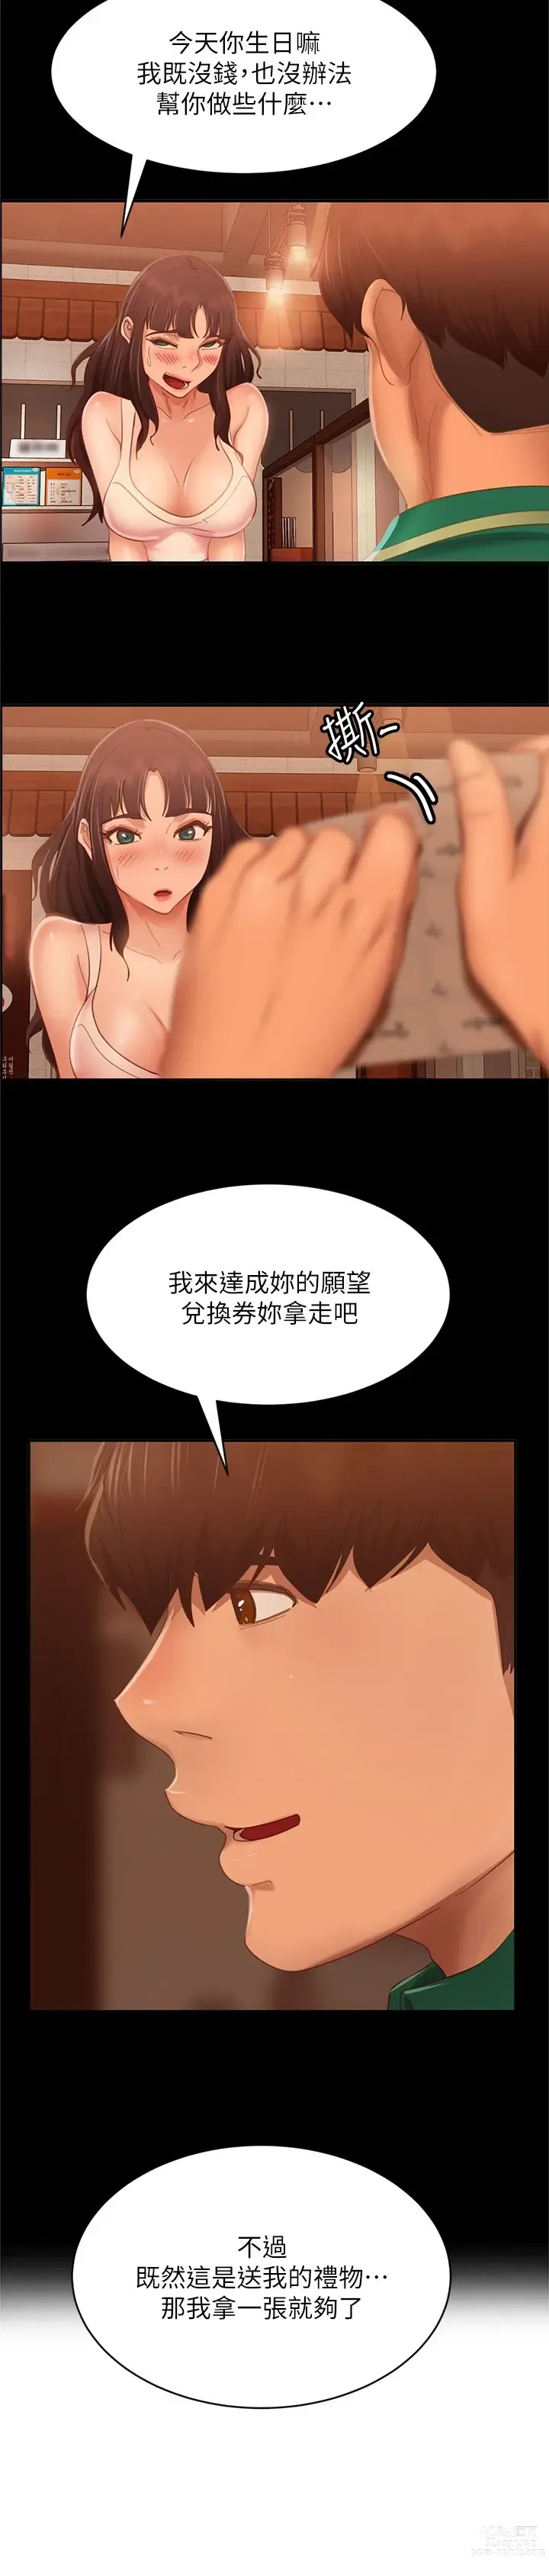 Page 1430 of manga 不良女房客 41-80